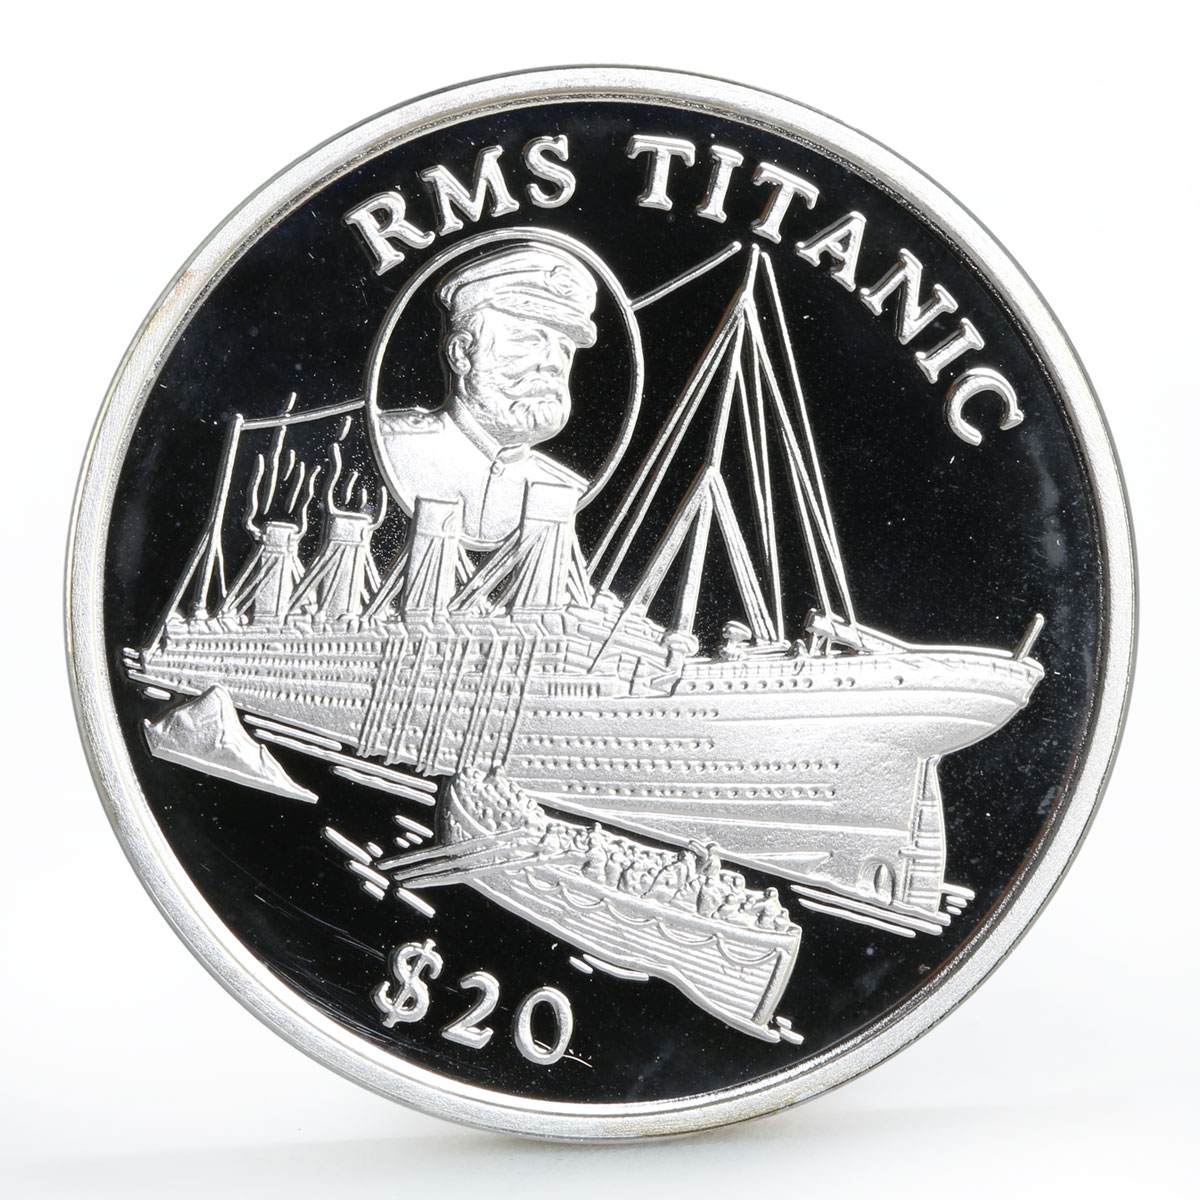 Liberia 20 dollars RMS Titanic Ship Cruiser Steamer proof silver coin 1998